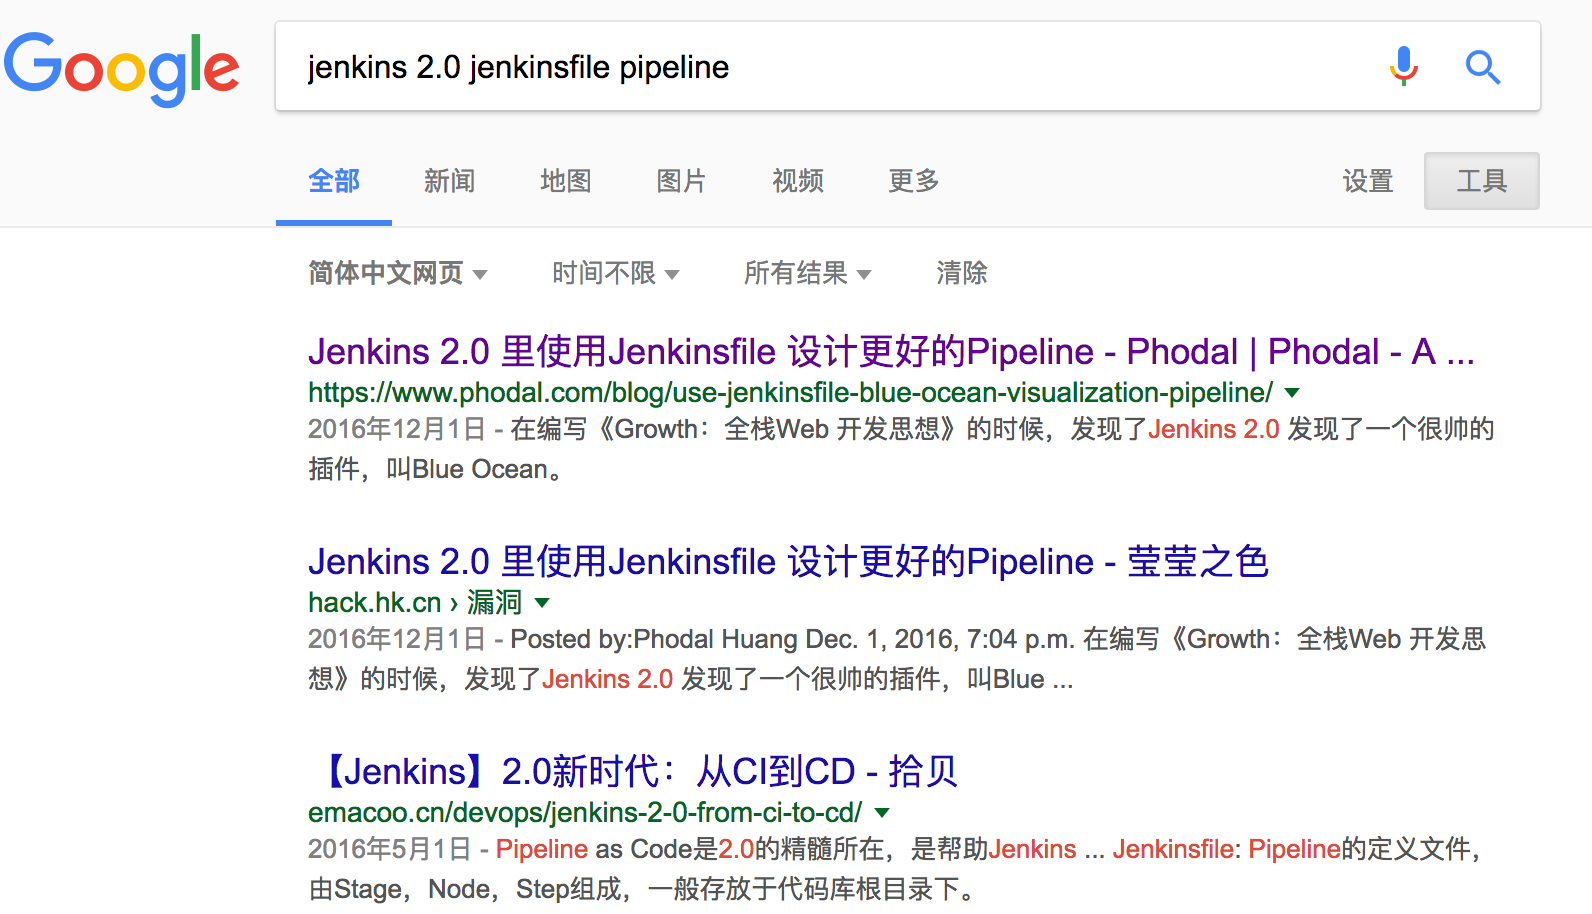 Google jenkins 2.0 pipeline